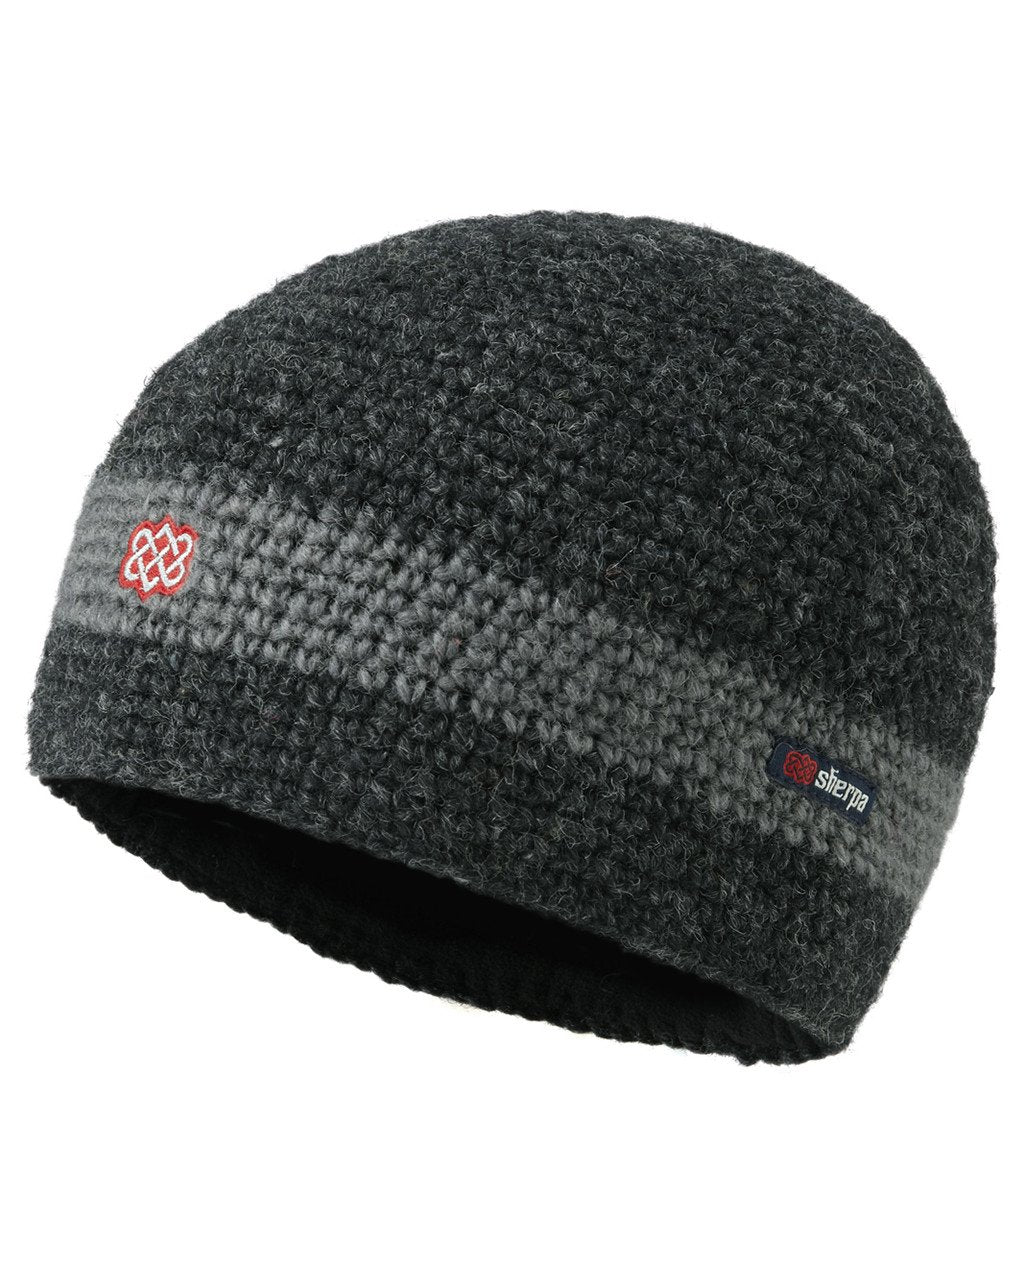 Sherpa - Renzing Hat